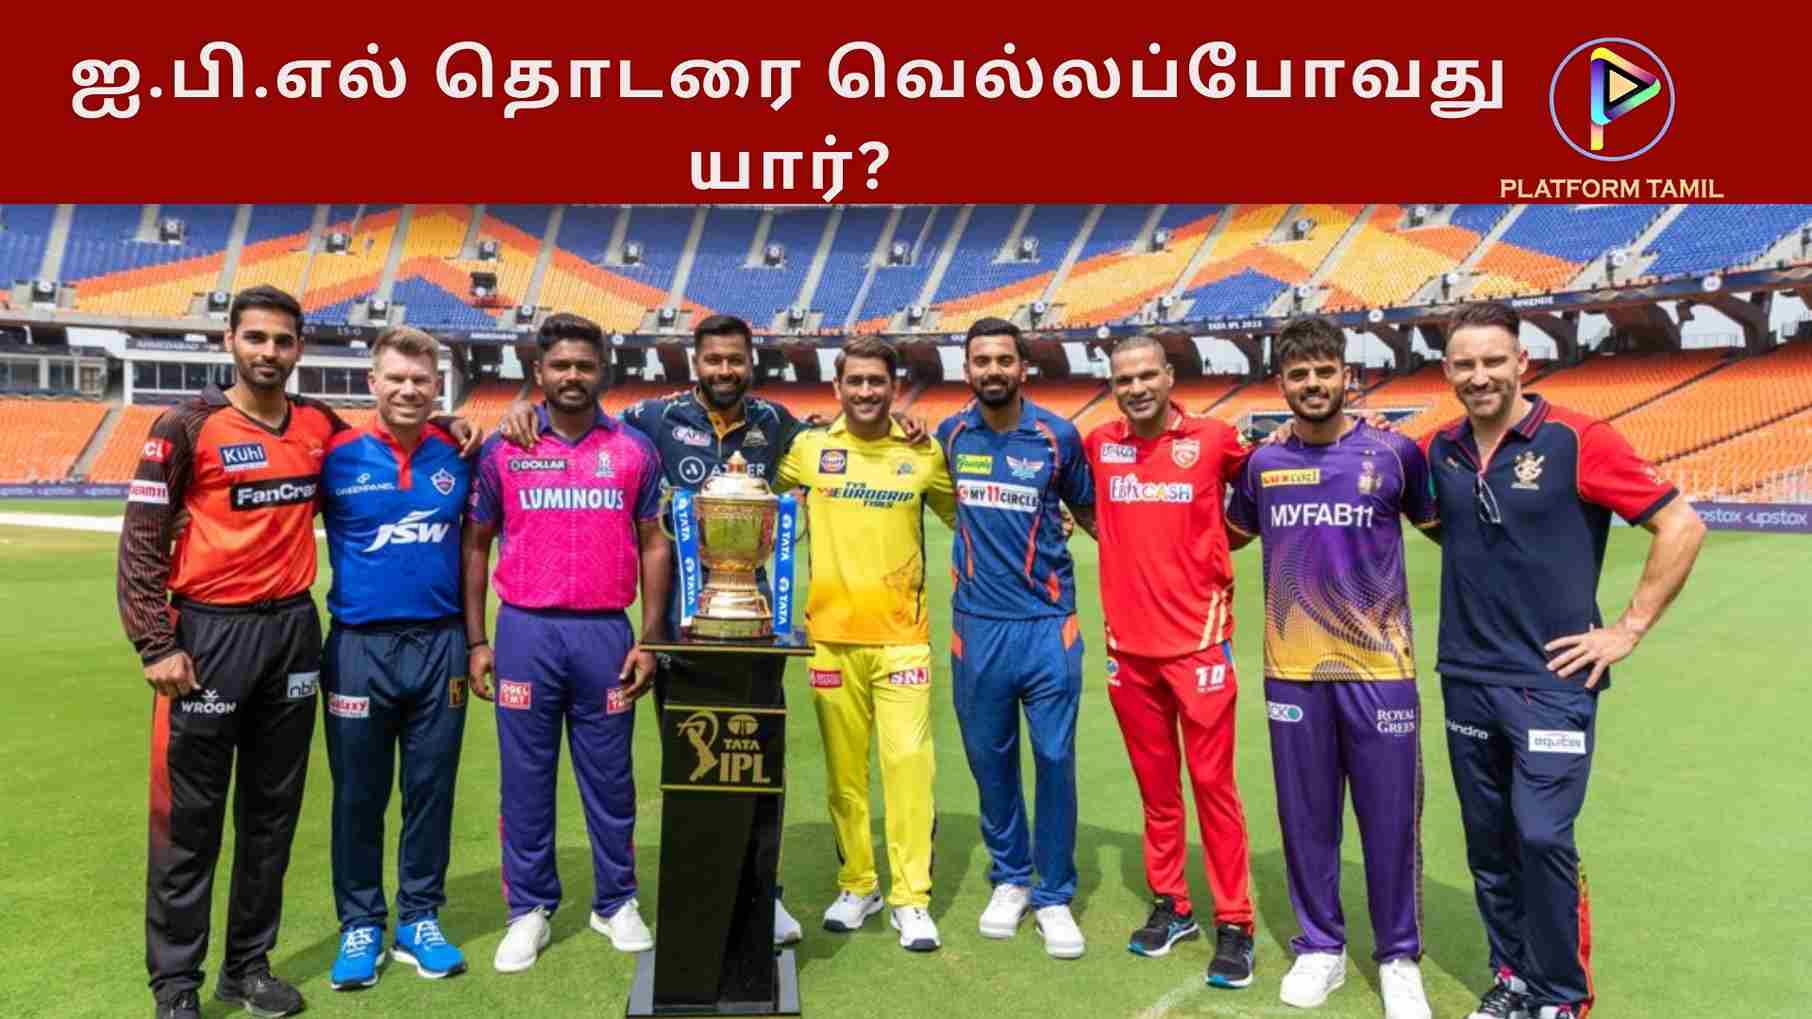 Who Won Today's IPL Match - Platform Tamil